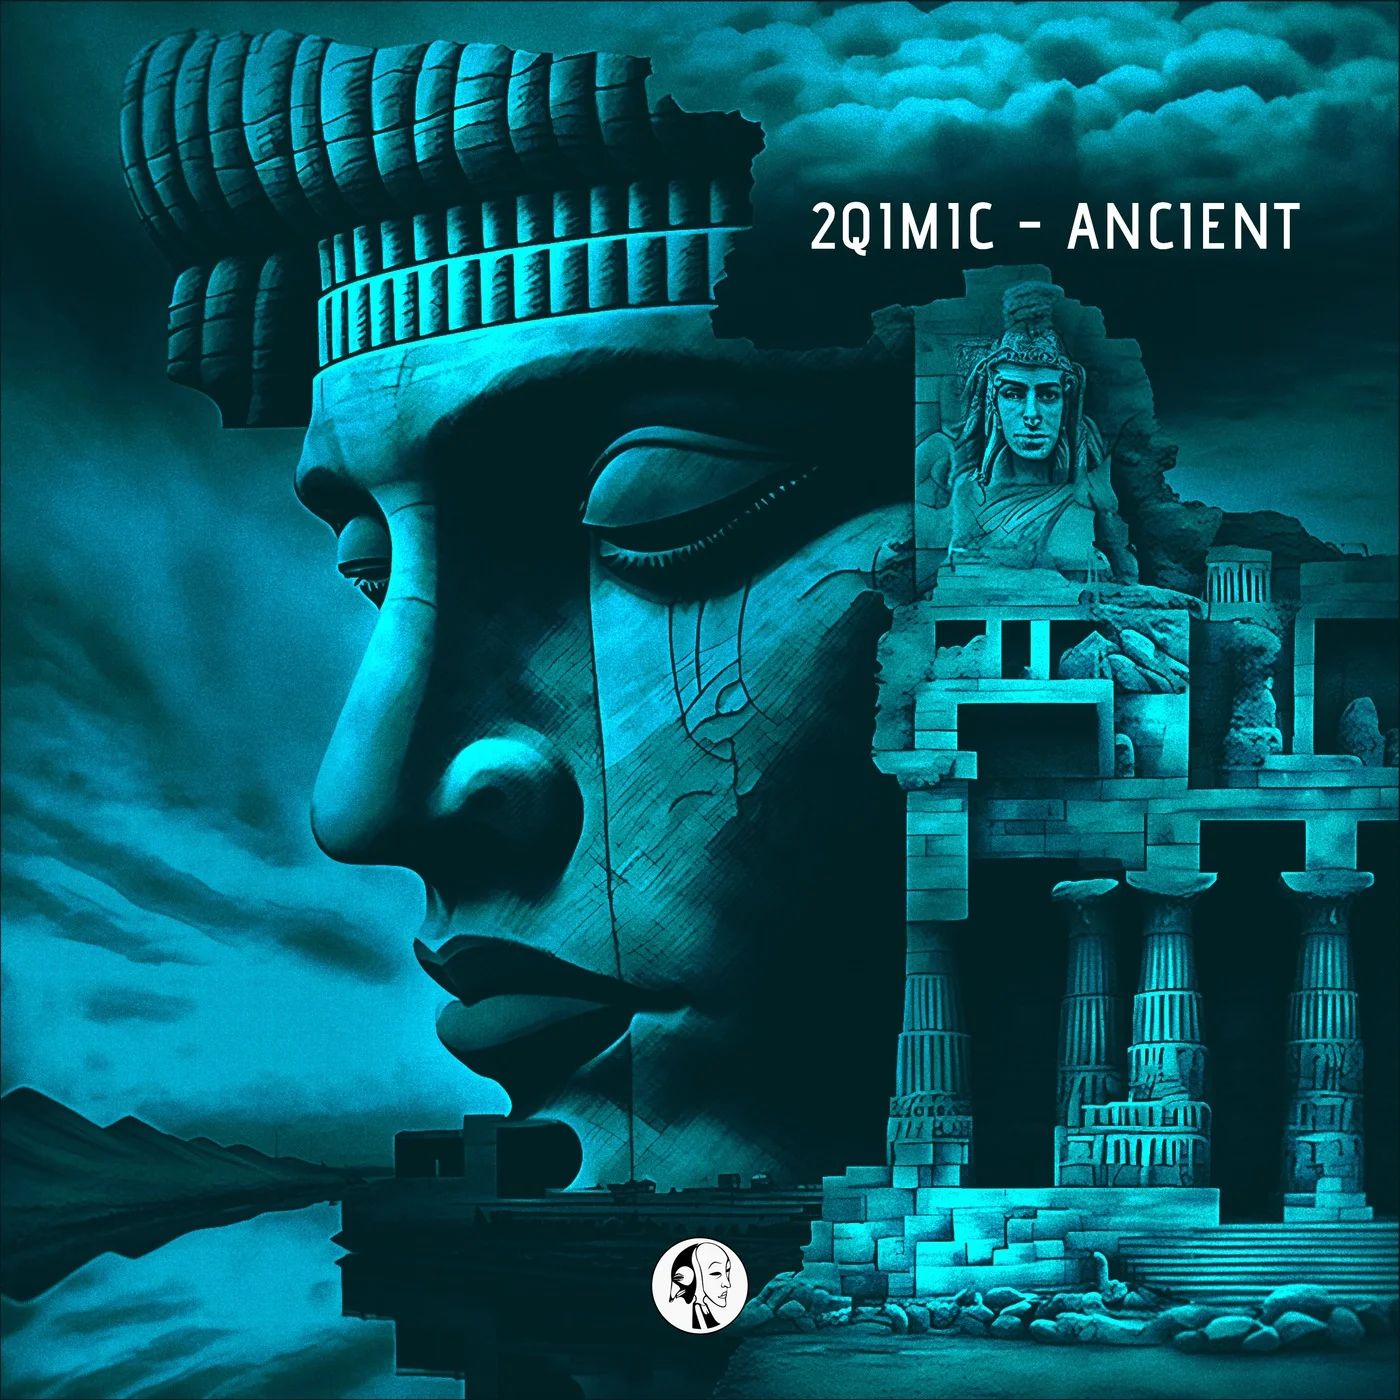 2qimic - Ancient (Original Mix)